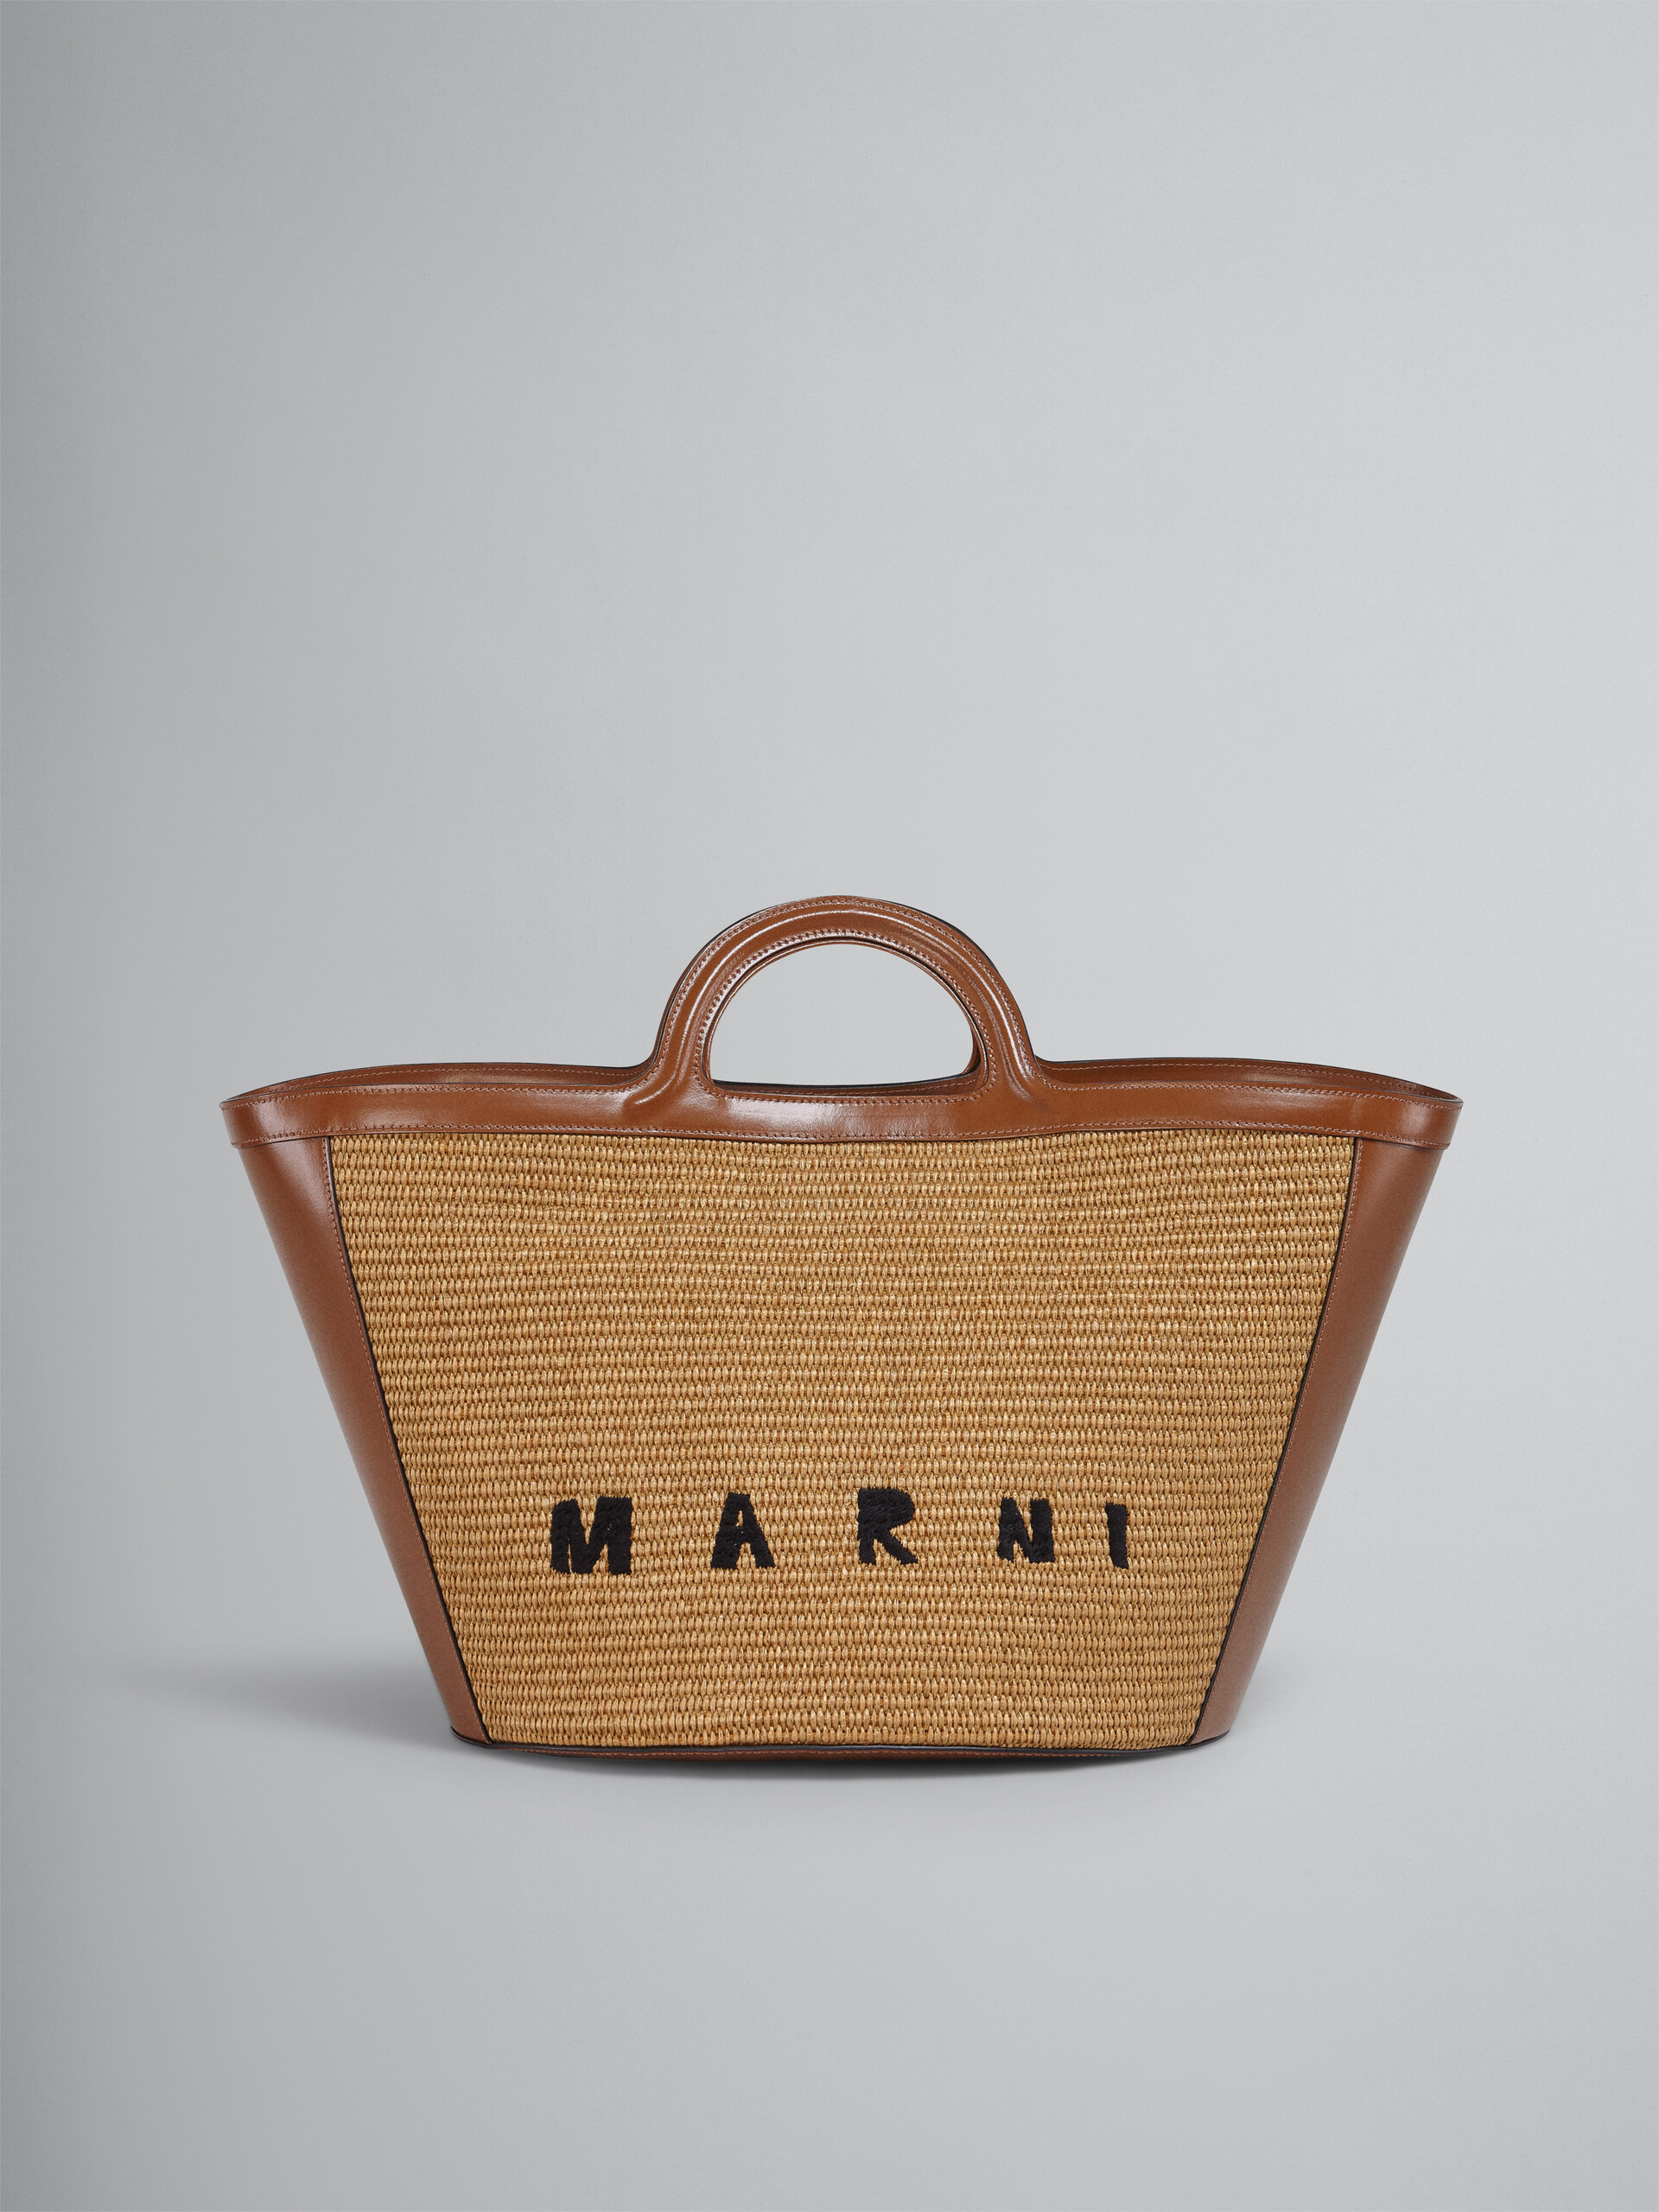 Brown leather and raffia large TROPICALIA SUMMER bag - Handbags - Image 1